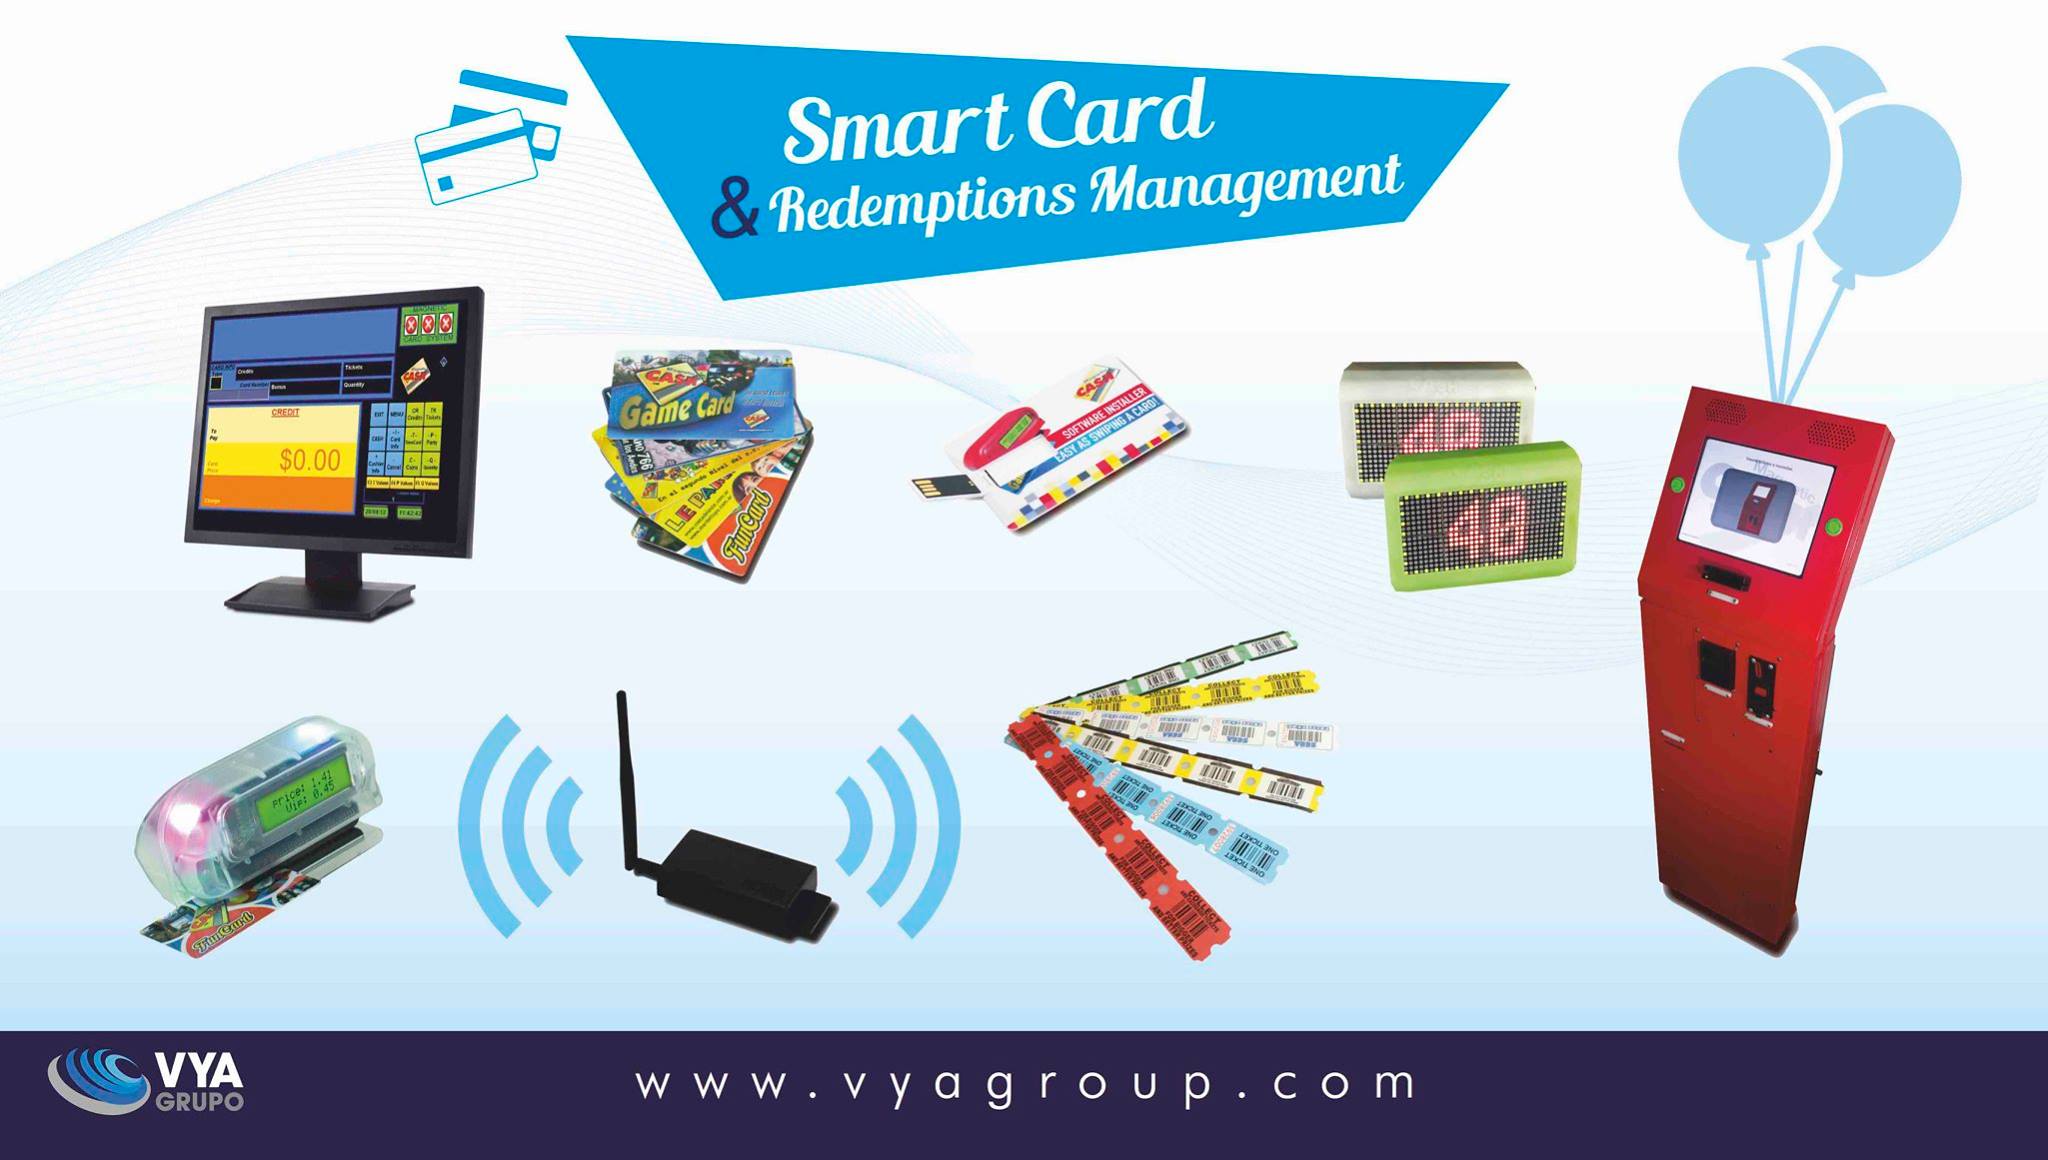 Smart Cards & Redemptions Management